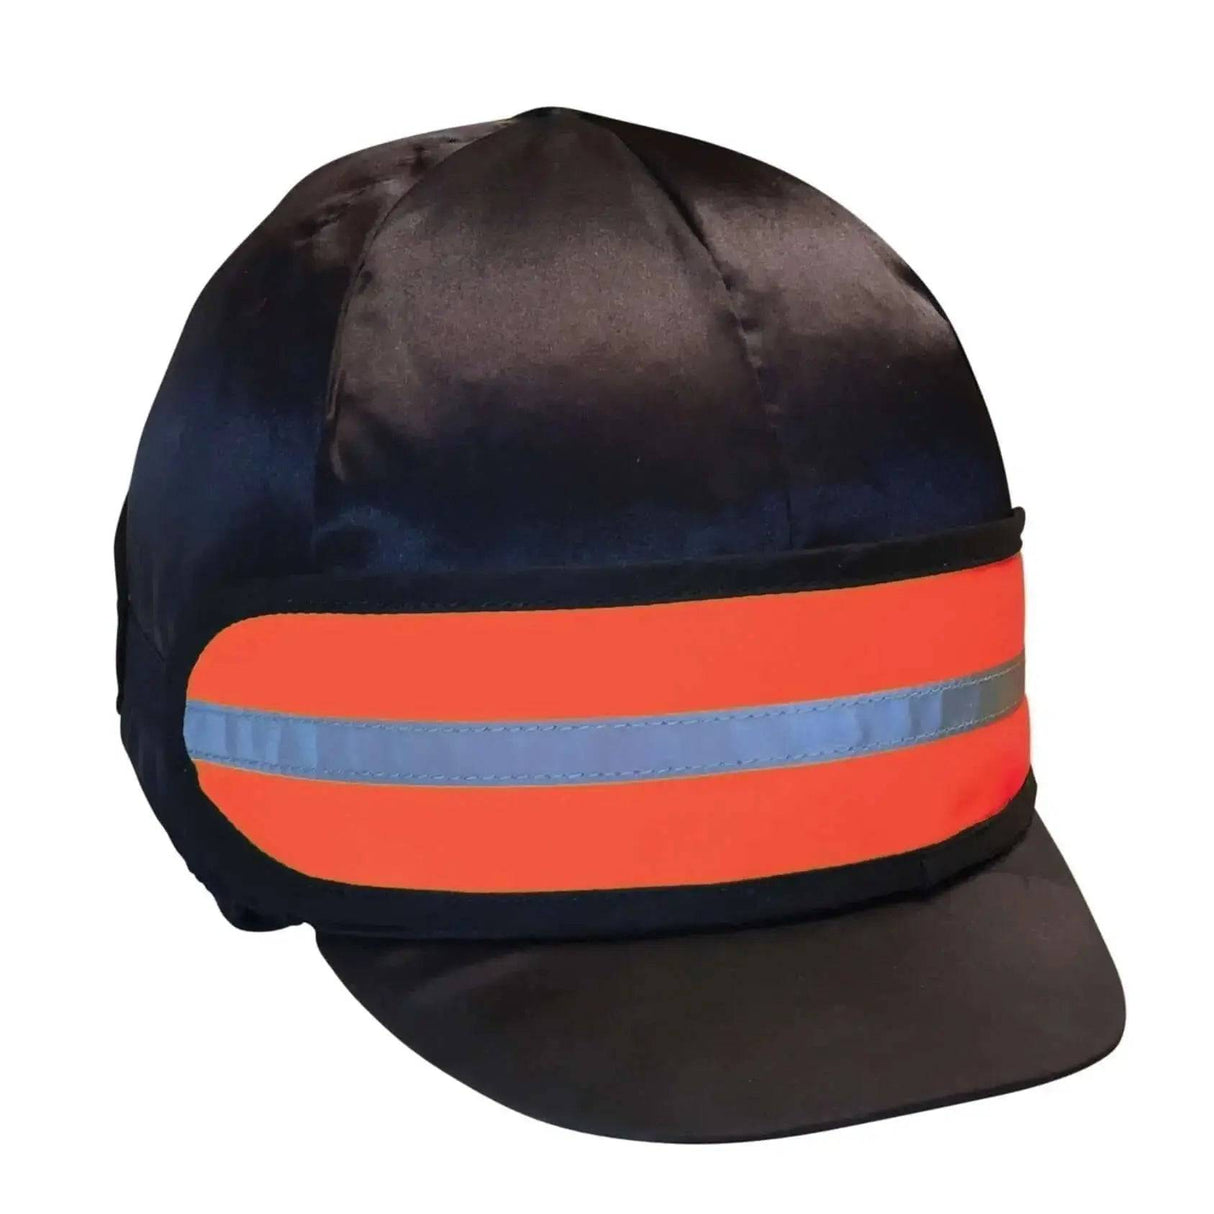 Reflector Elasticated Hat Band by Hy Equestrian Hi-Vis Orange One Size Barnstaple Equestrian Supplies